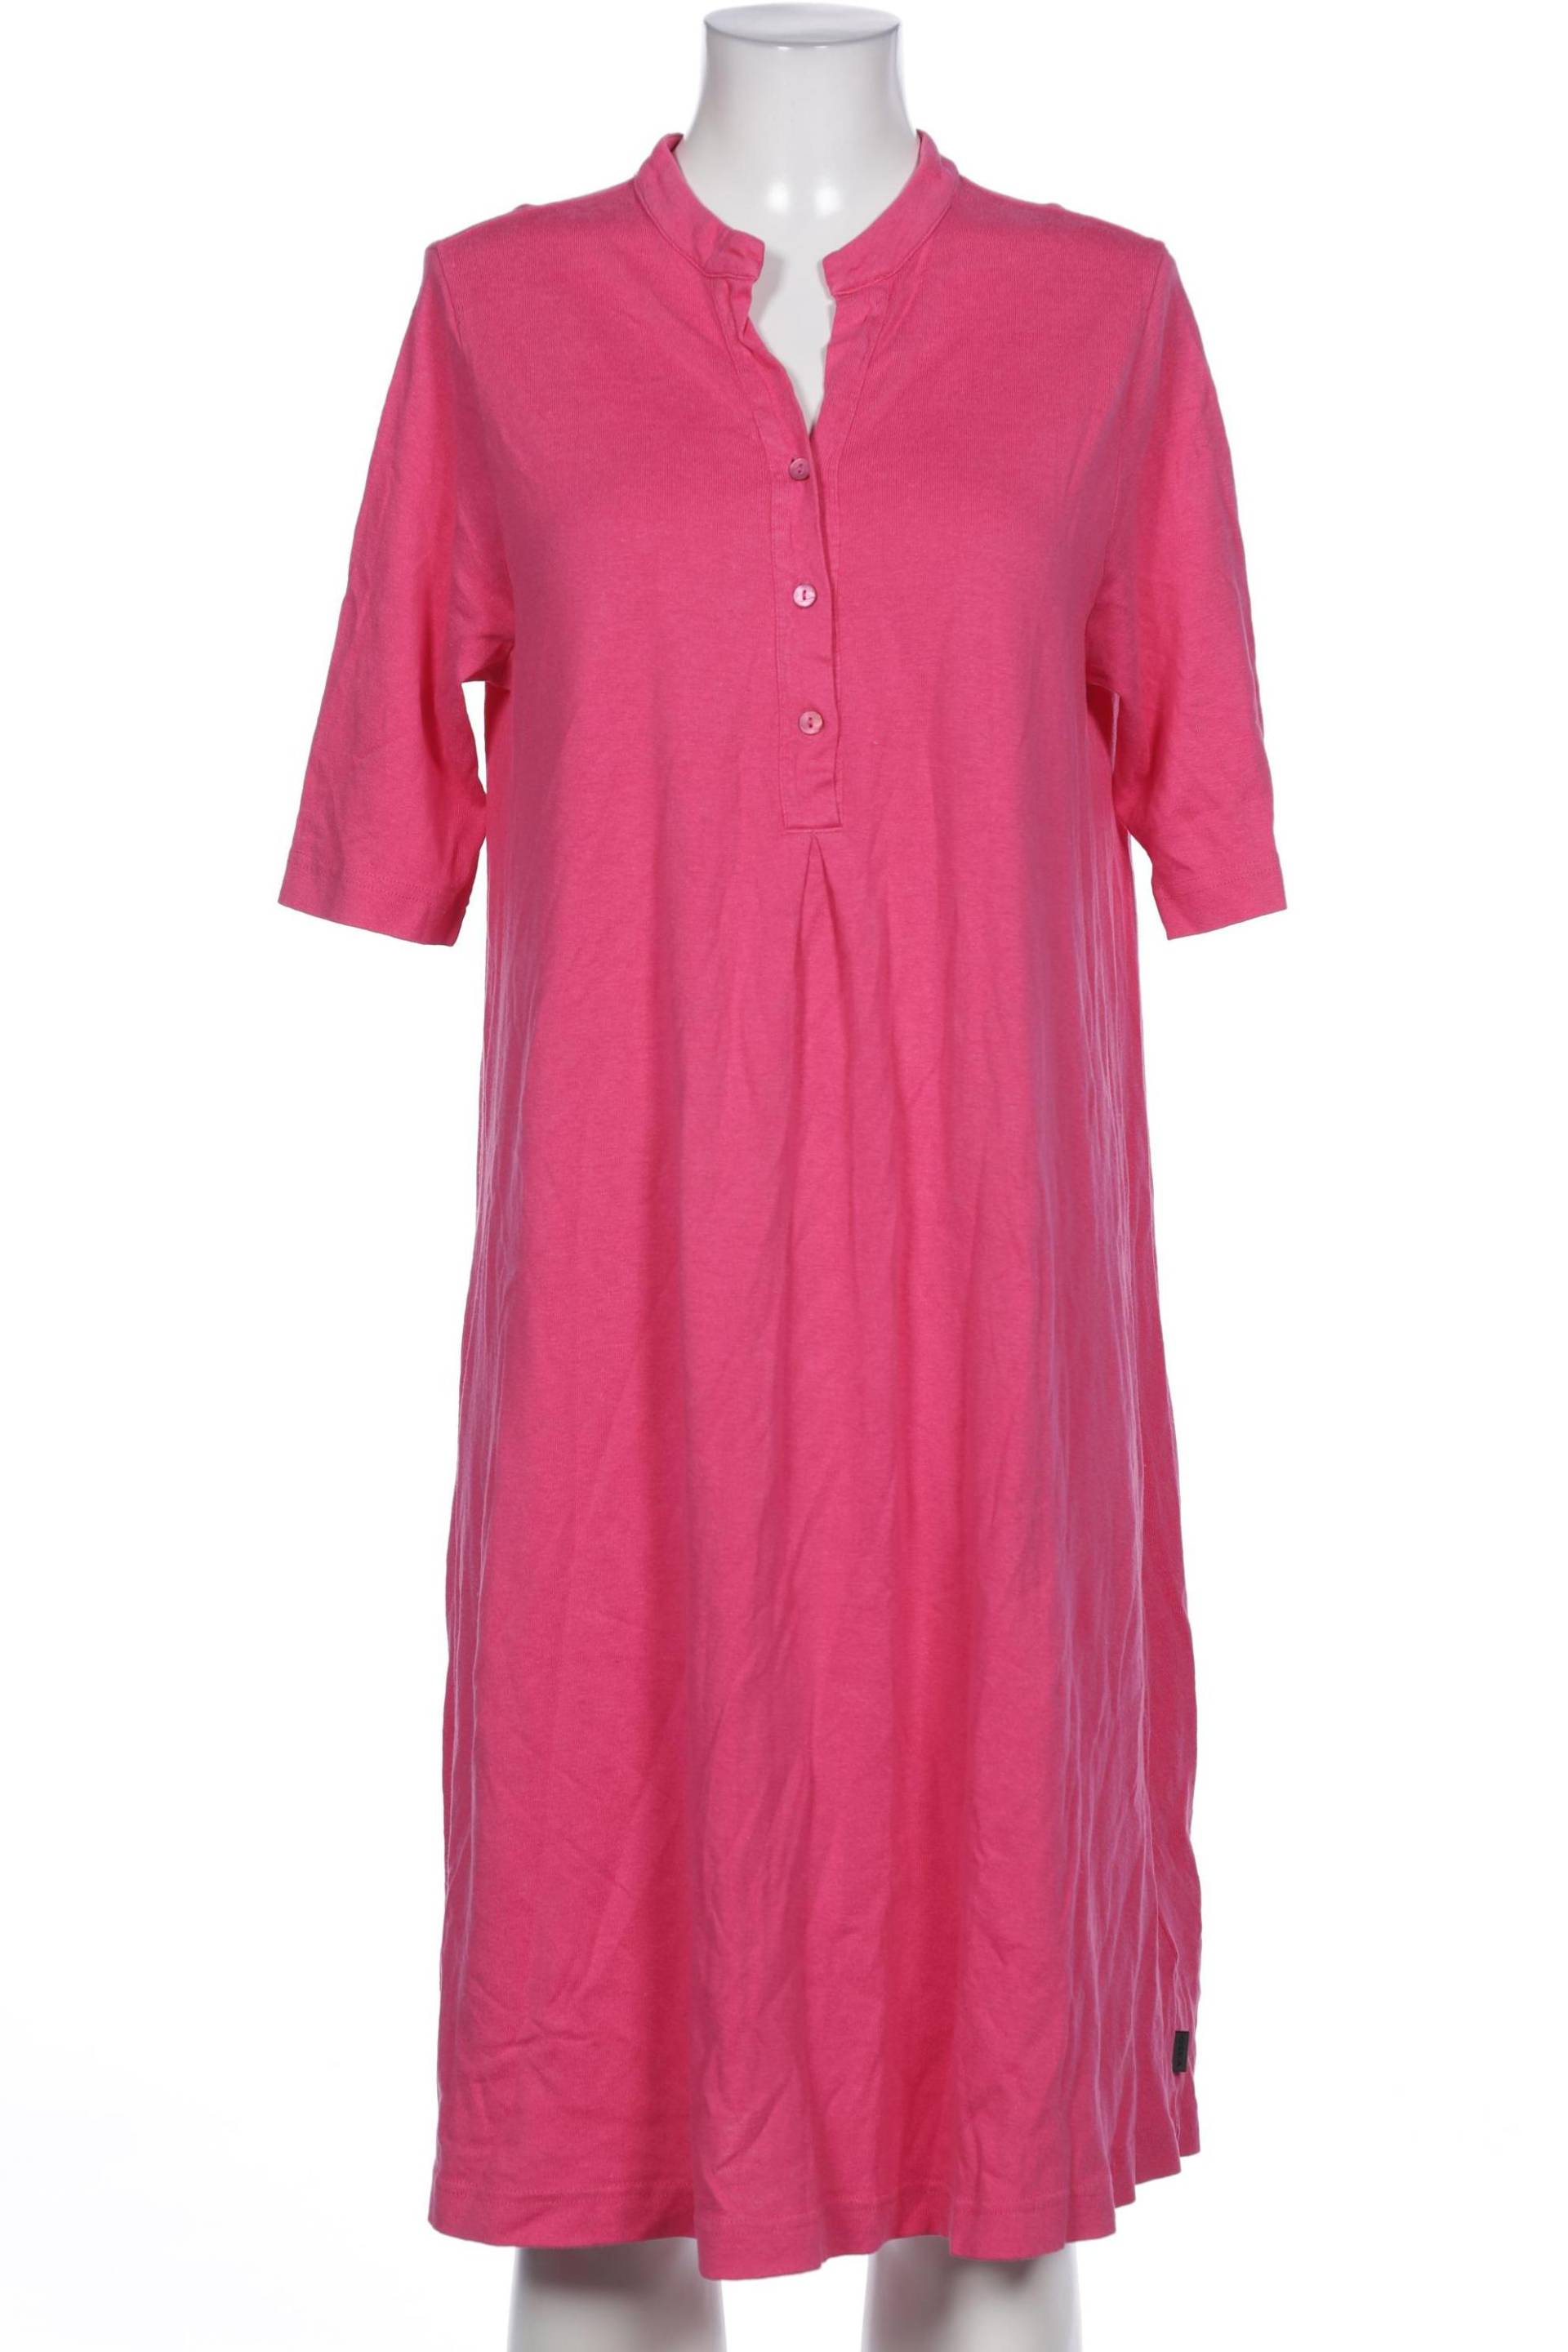 Oska Damen Kleid, pink von Oska